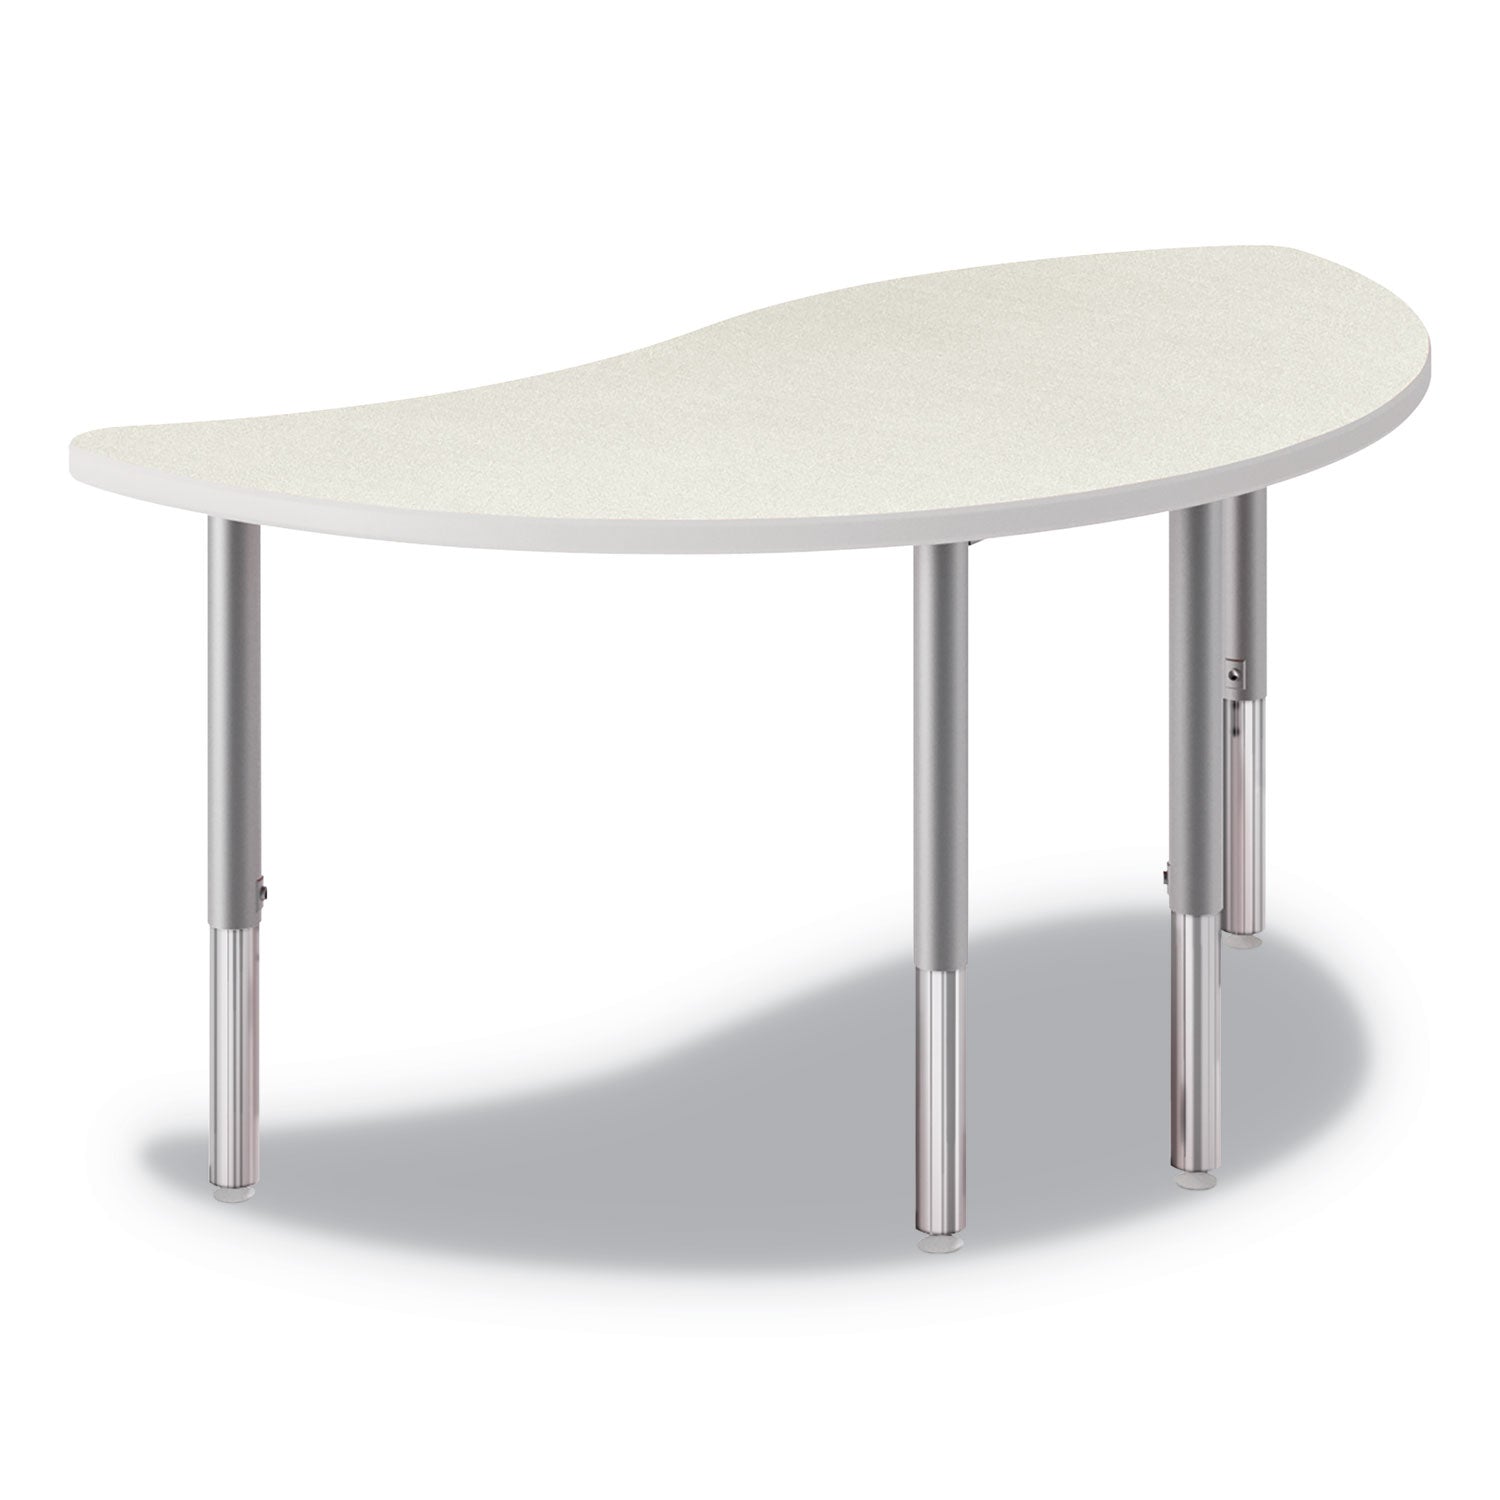 build-wisp-shape-table-top-54w-x-30d-silver-mesh_honsn3054enb9k - 2